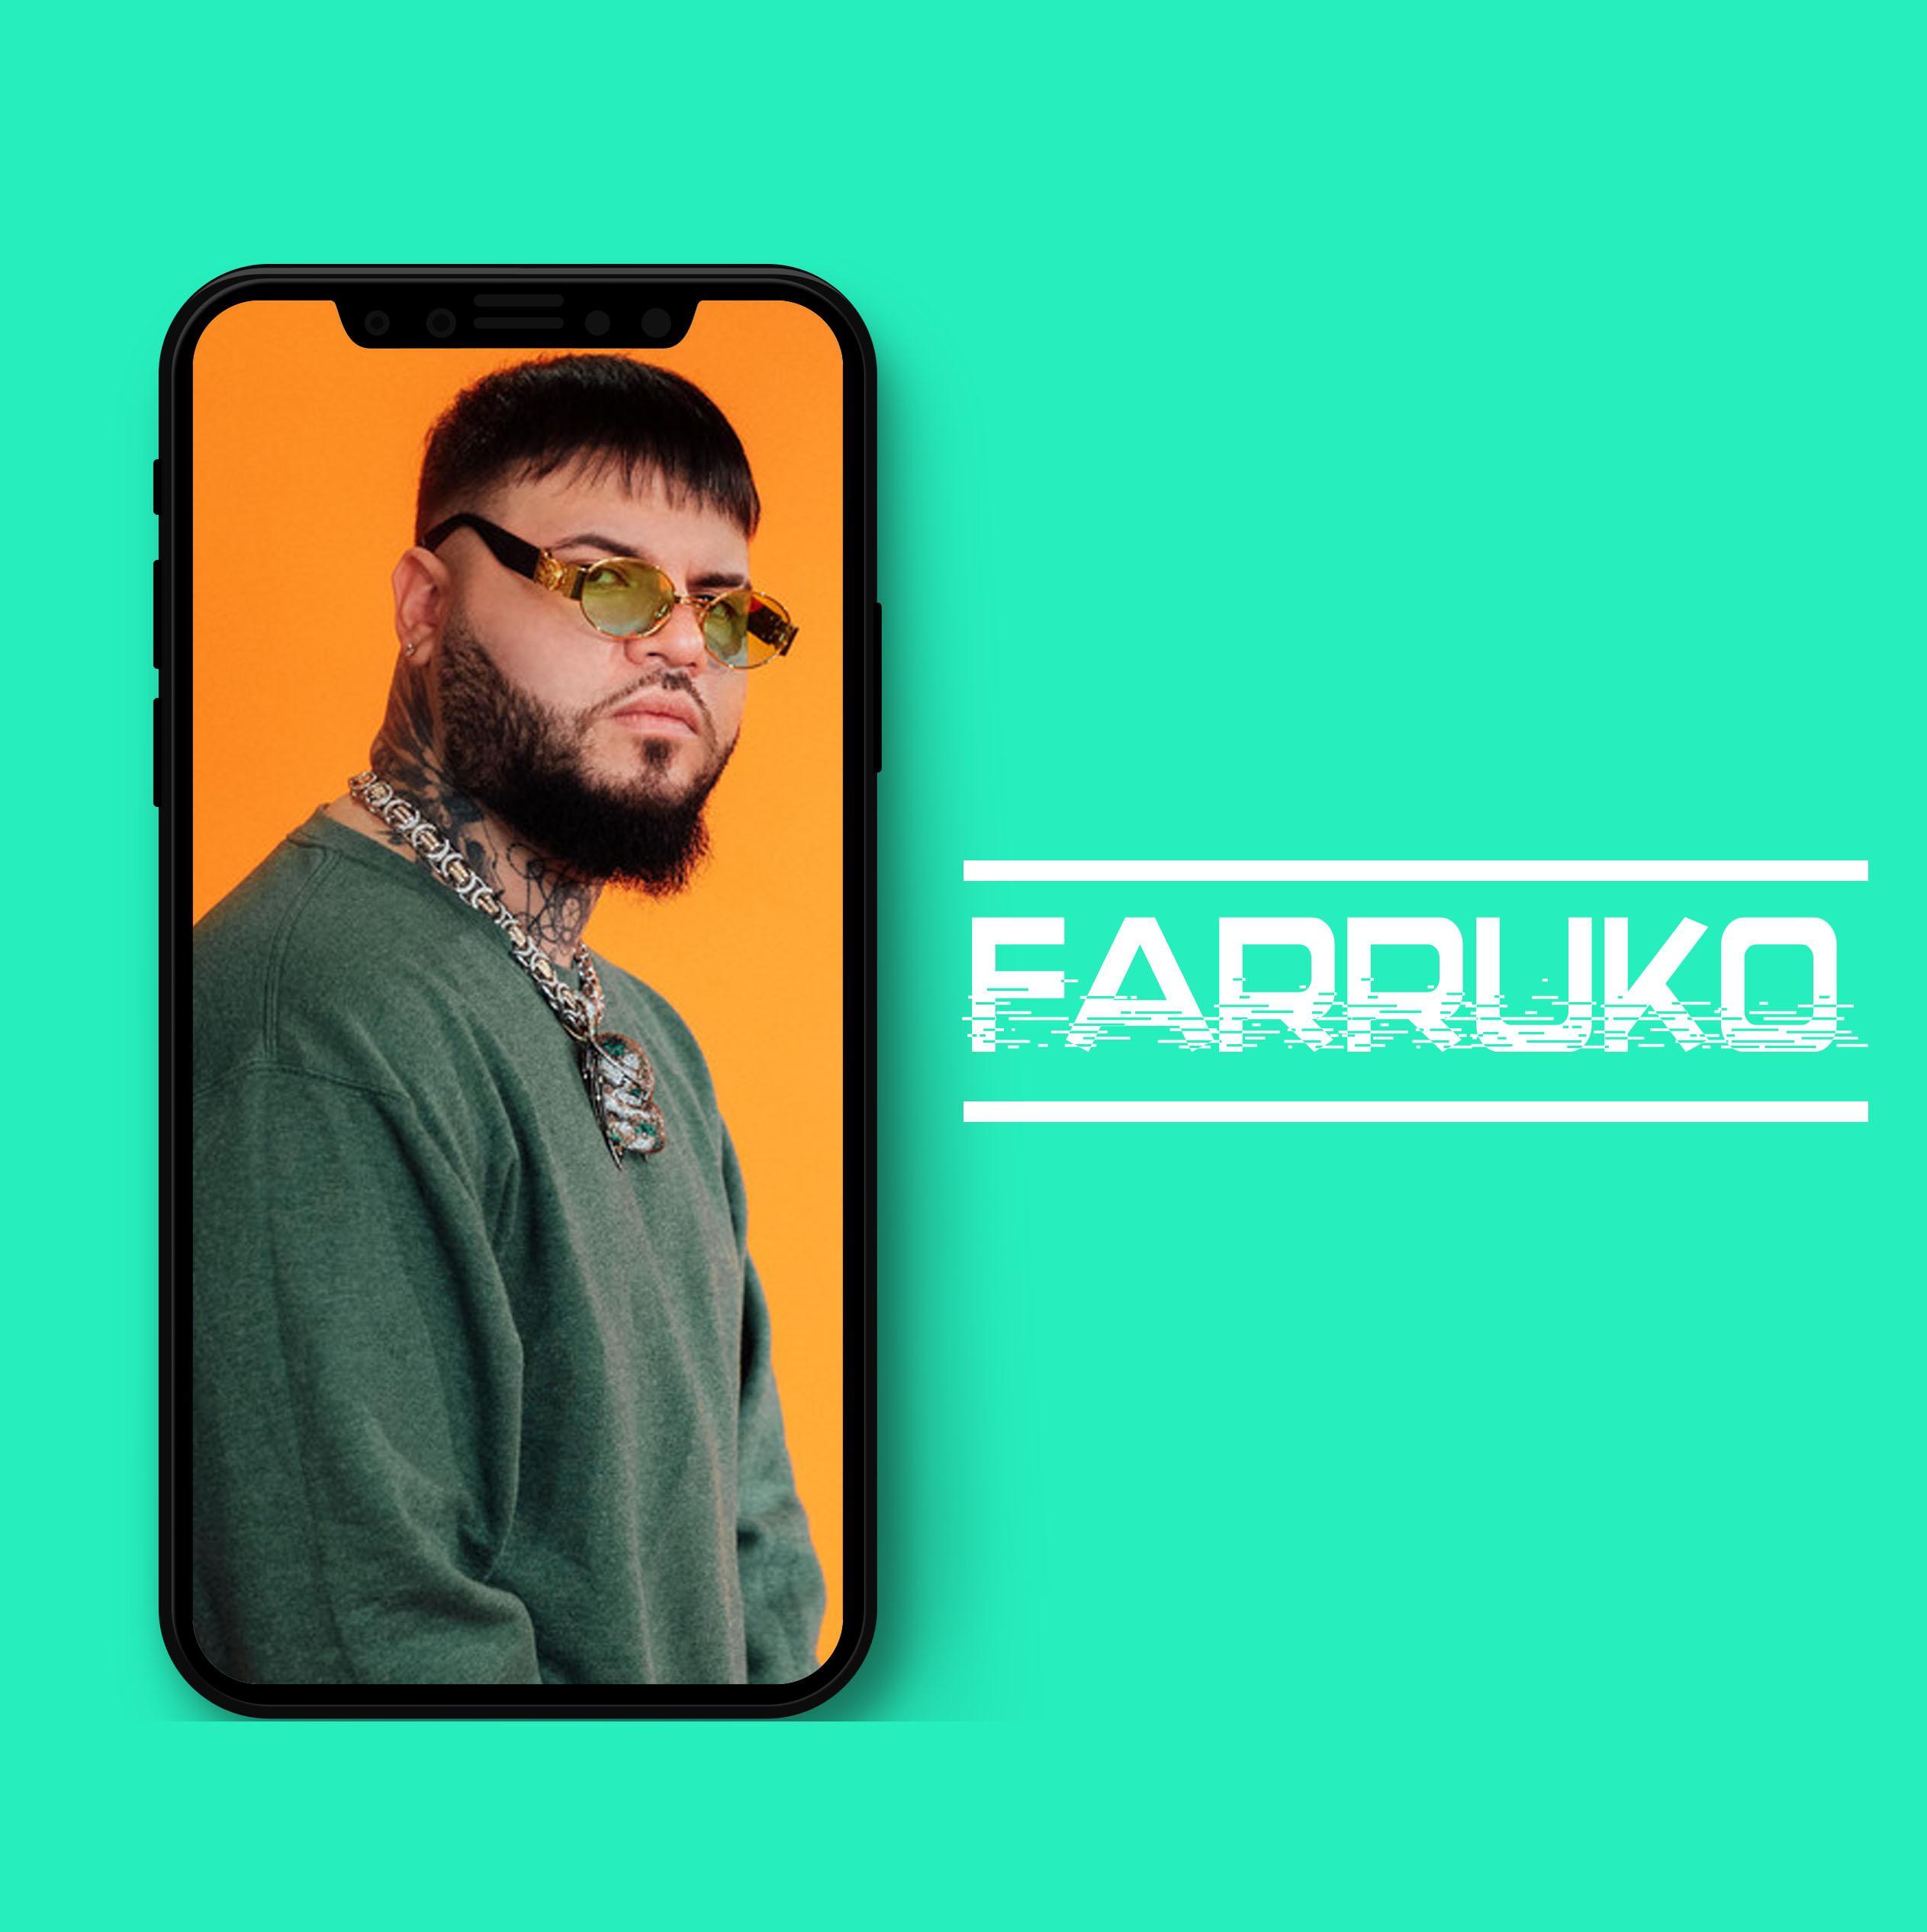 Farruko Wallpaper HD 4k For Android Apk